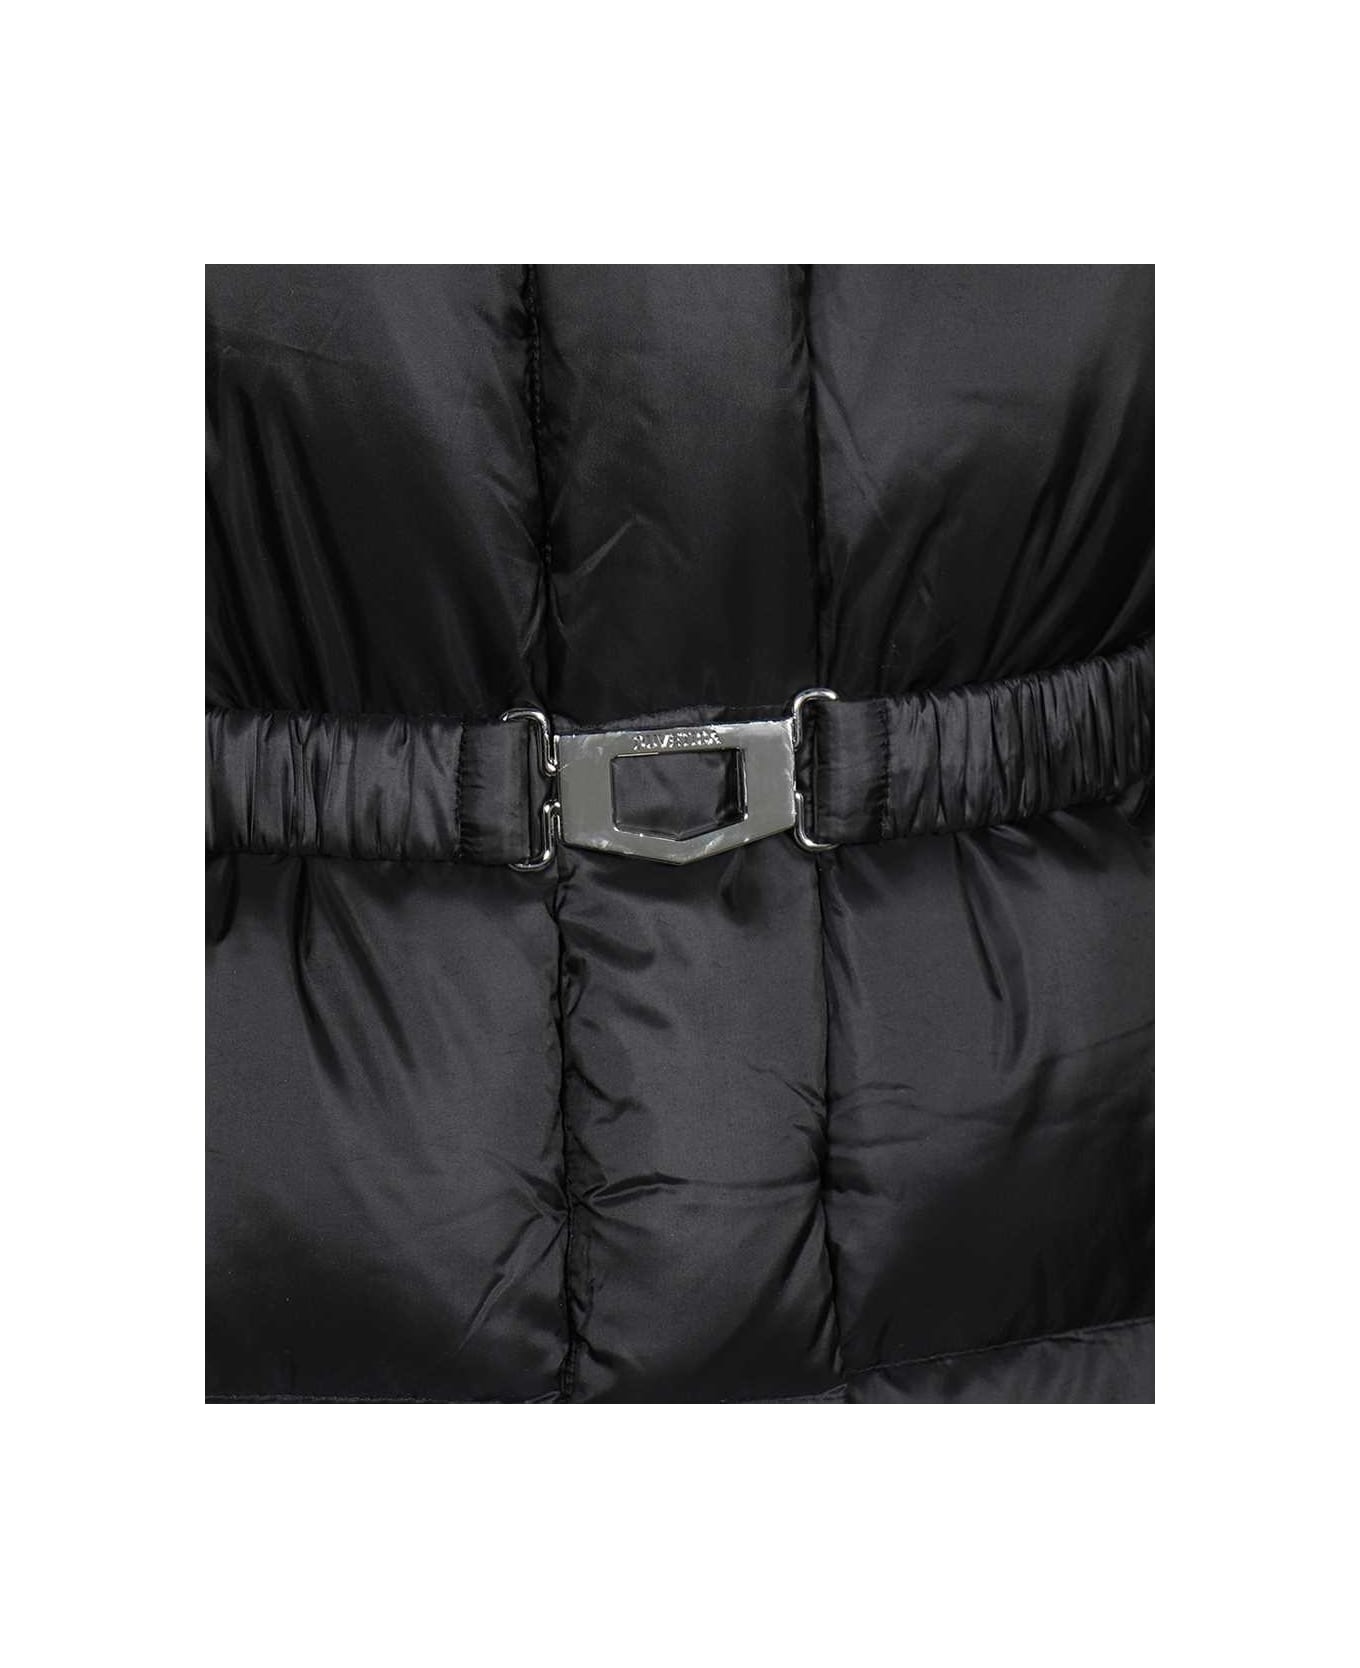 Duvetica Belted Hooded Long Down Jacket - black